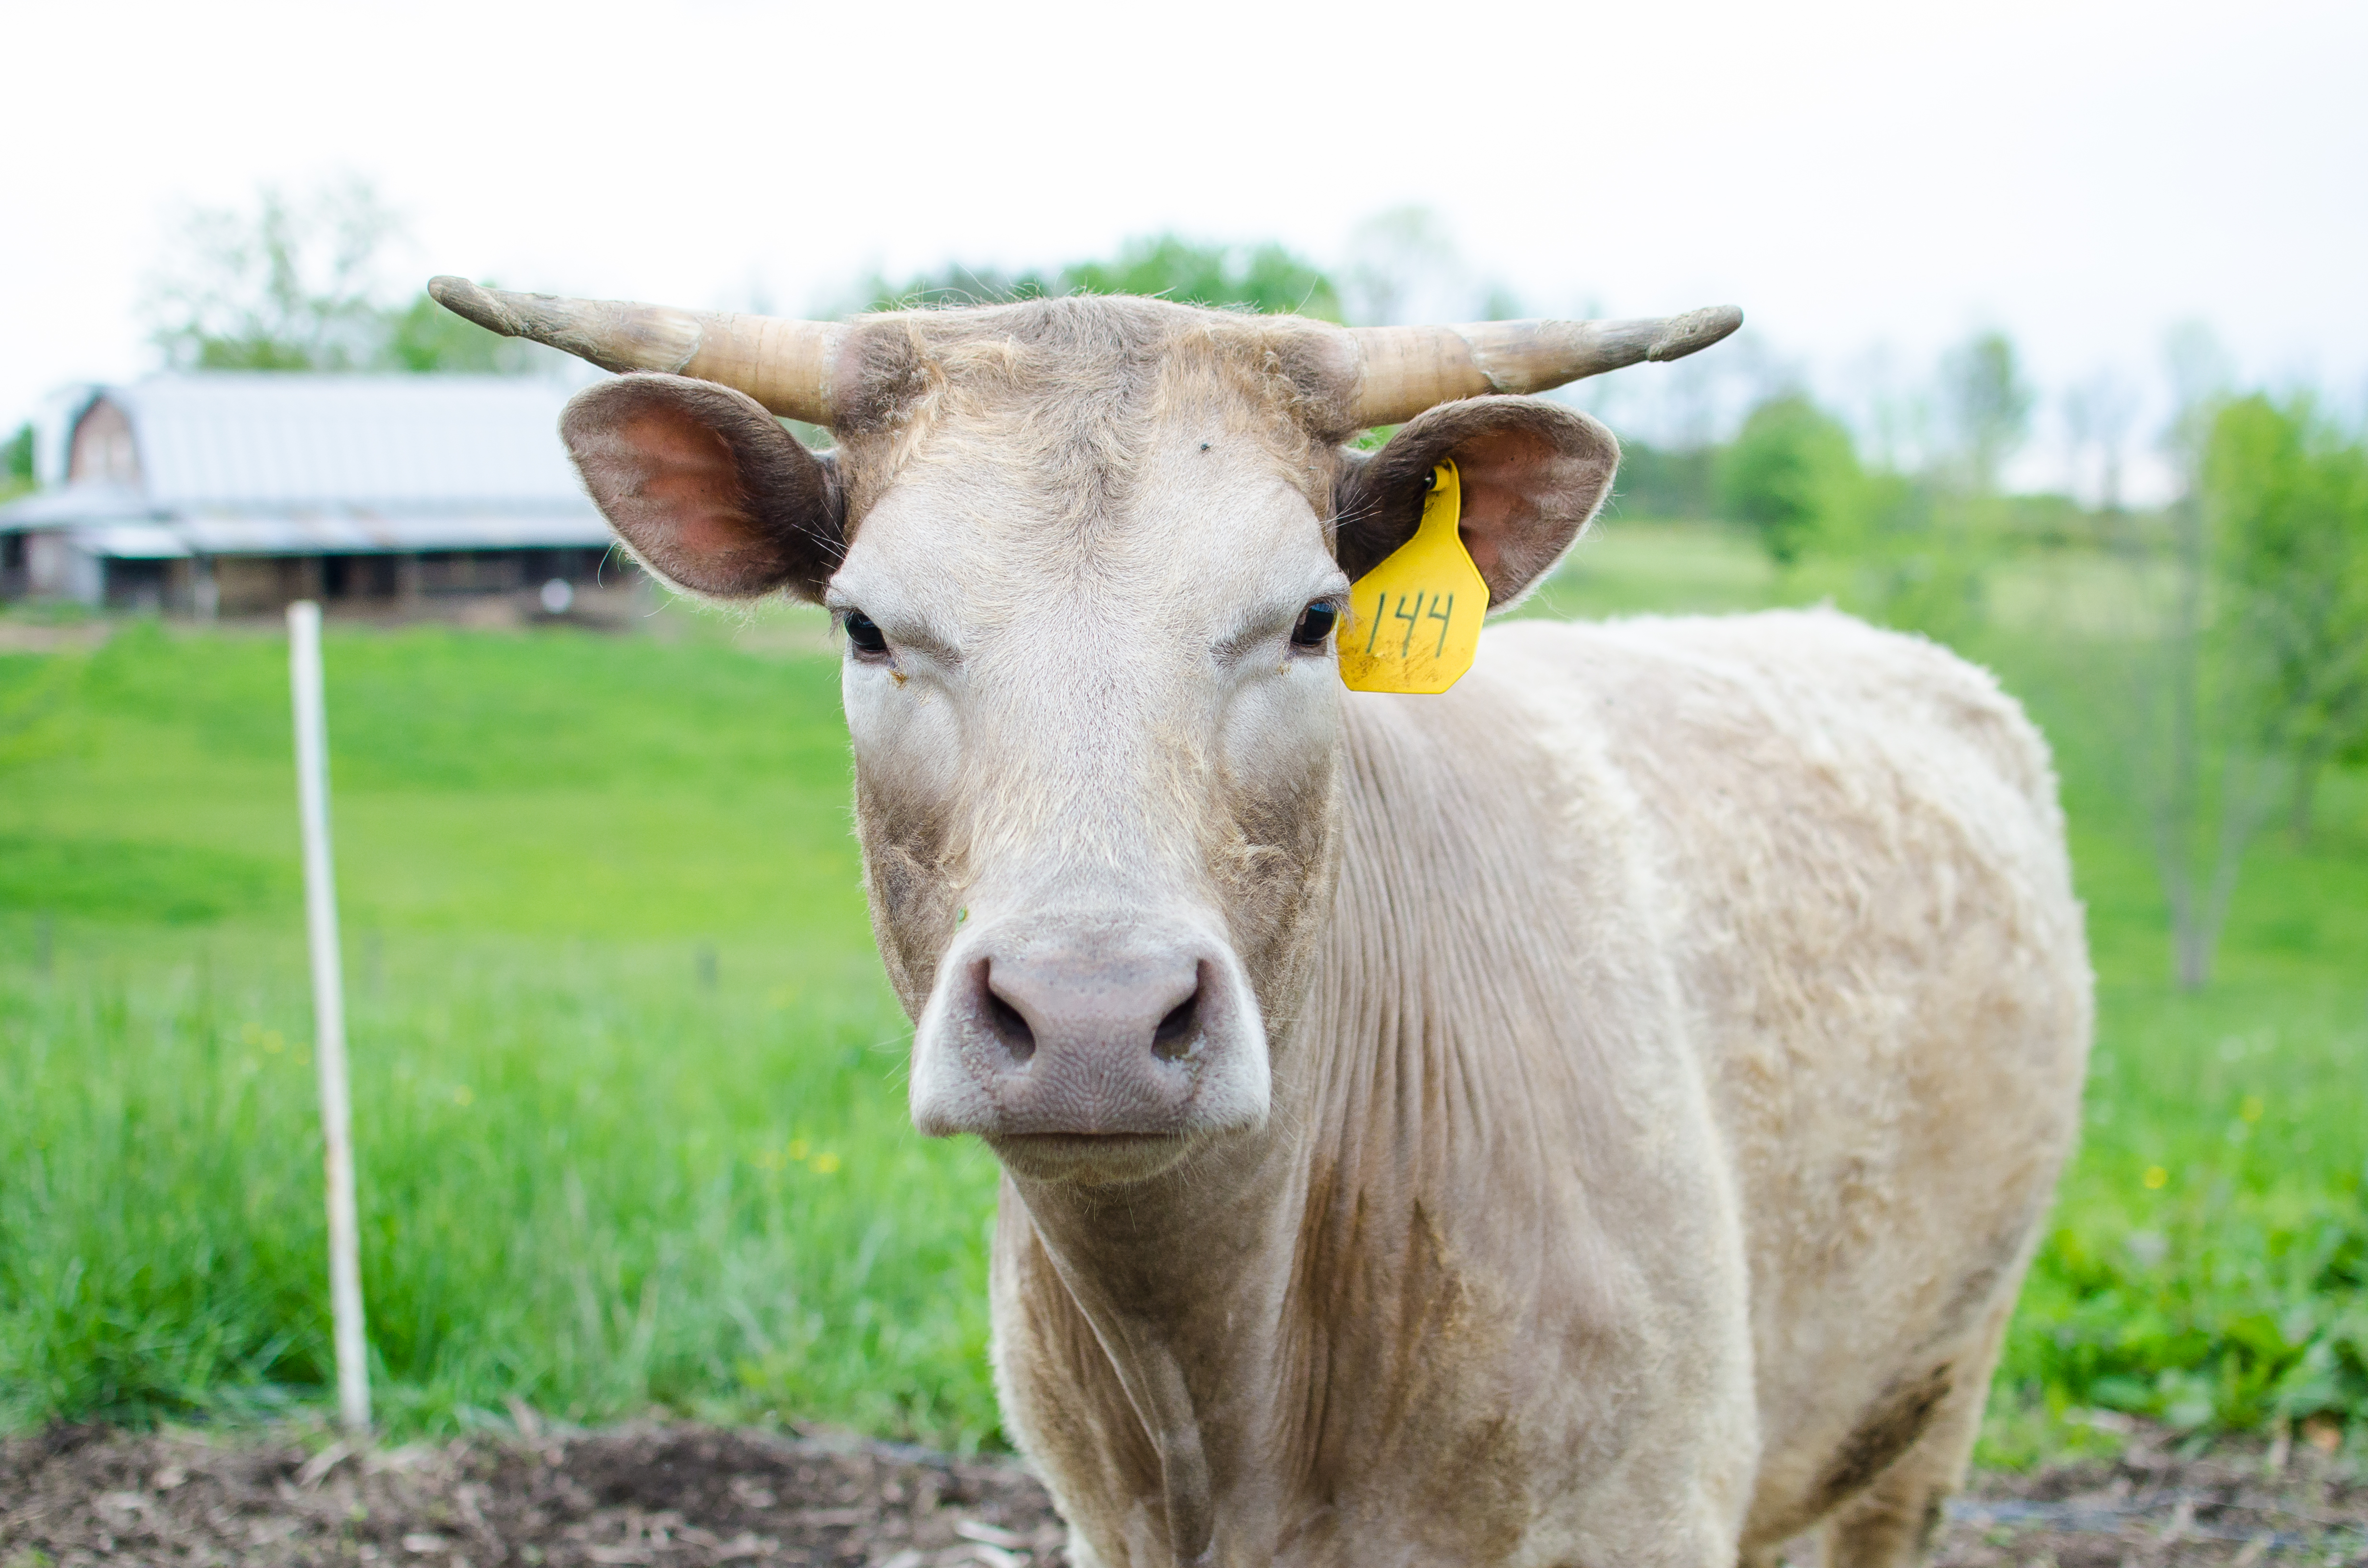 Family Milk Cow 101 - Homesteaders of America